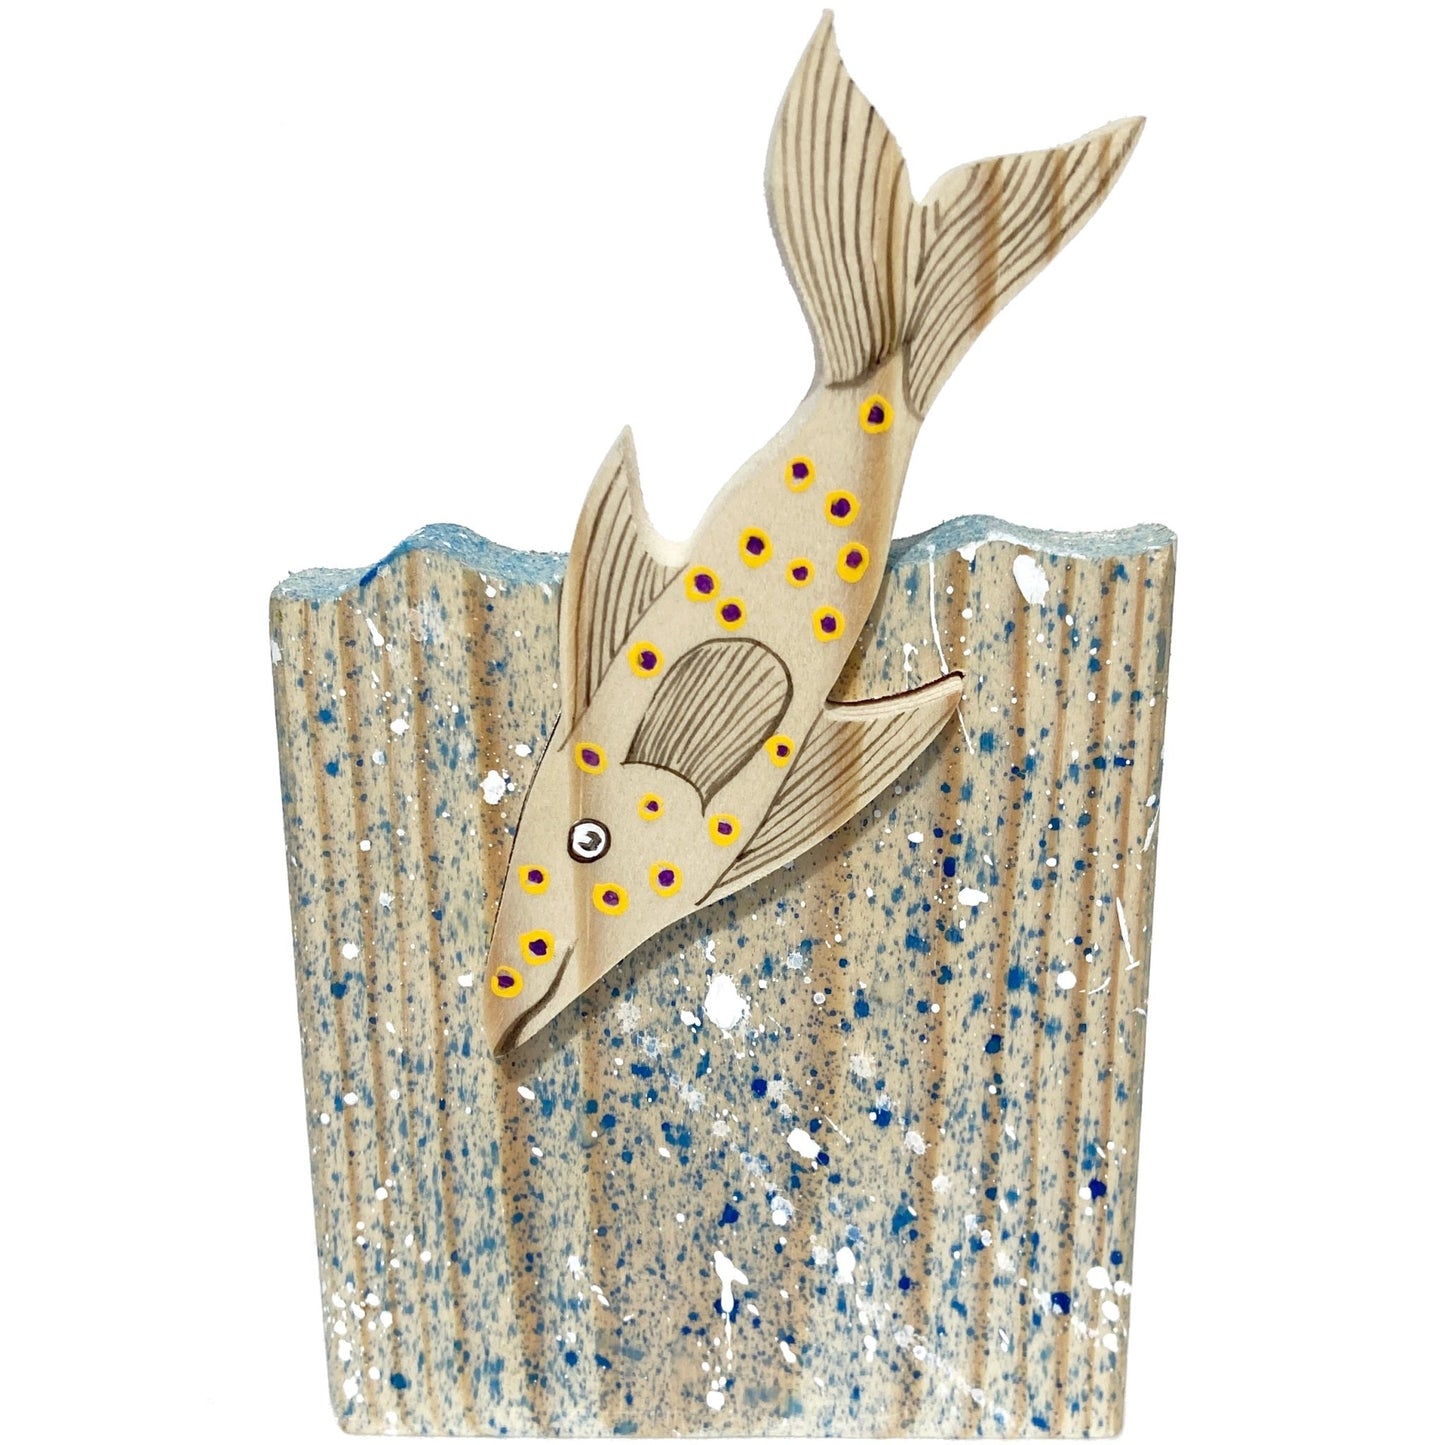 Fish on Wave Wooden Ornament - Interlocking Jigsaw Sculpture - East Neuk Beach Crafts